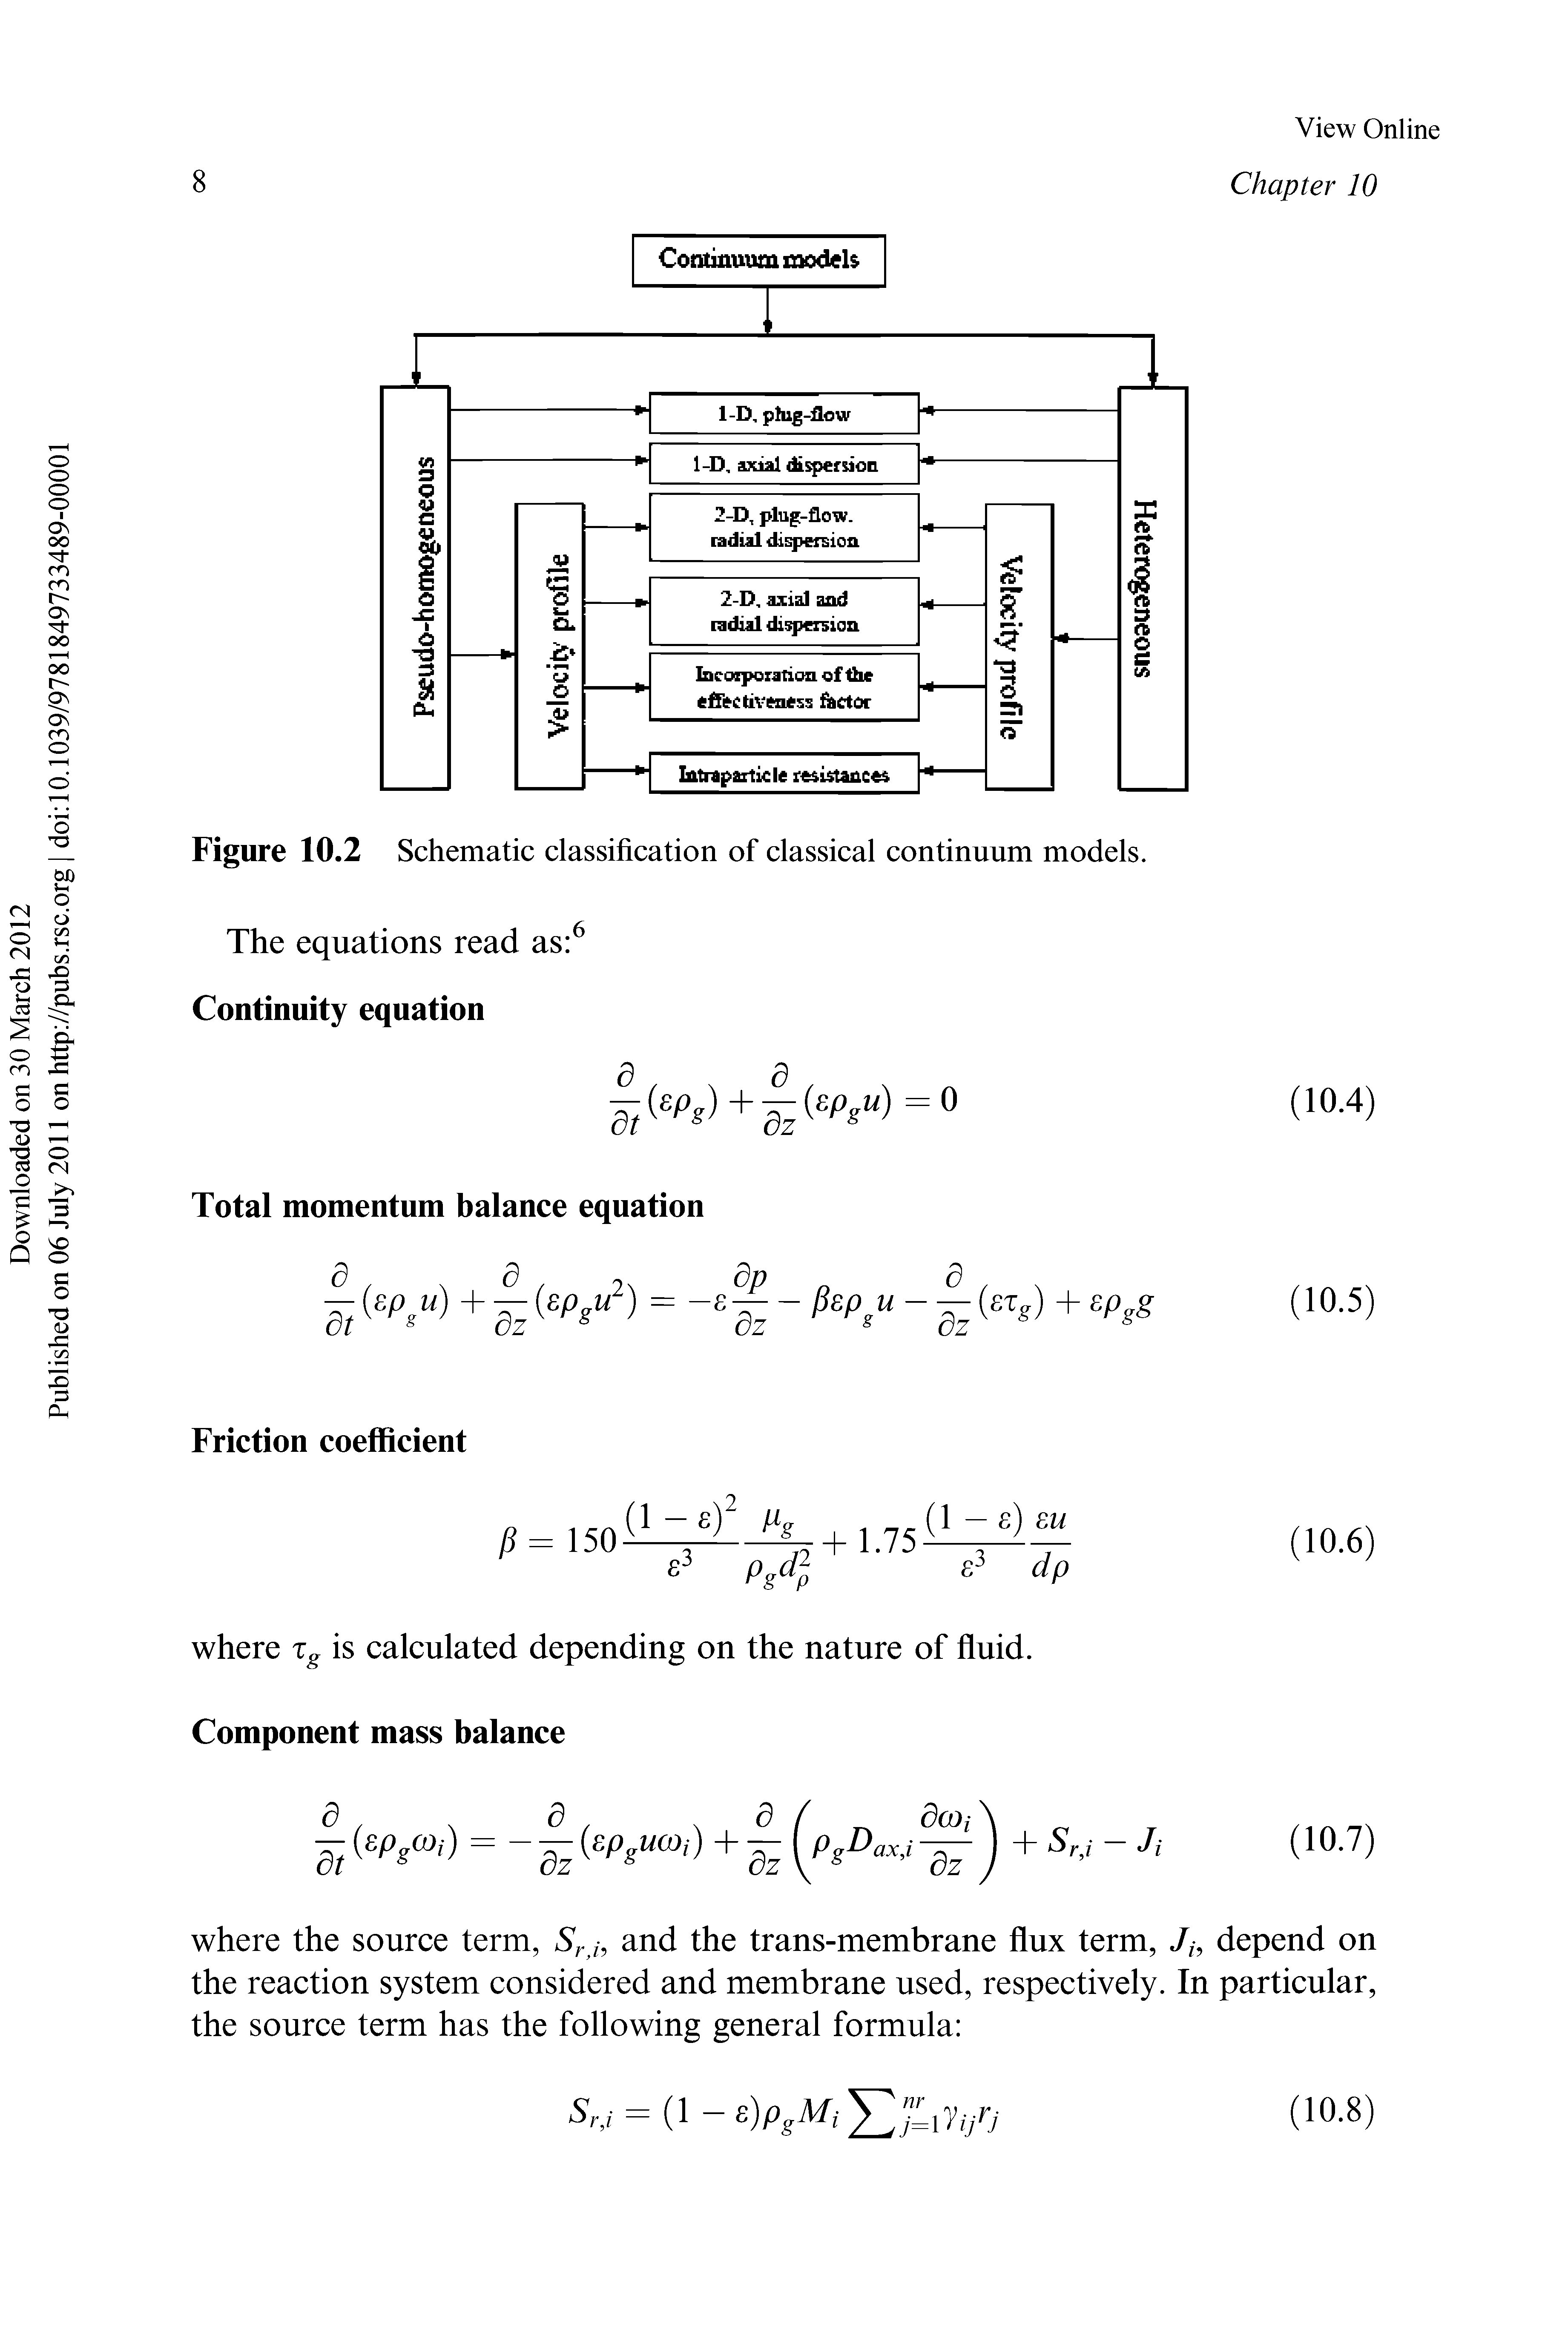 Figure 10.2 Schematic classification of classical continuum models.